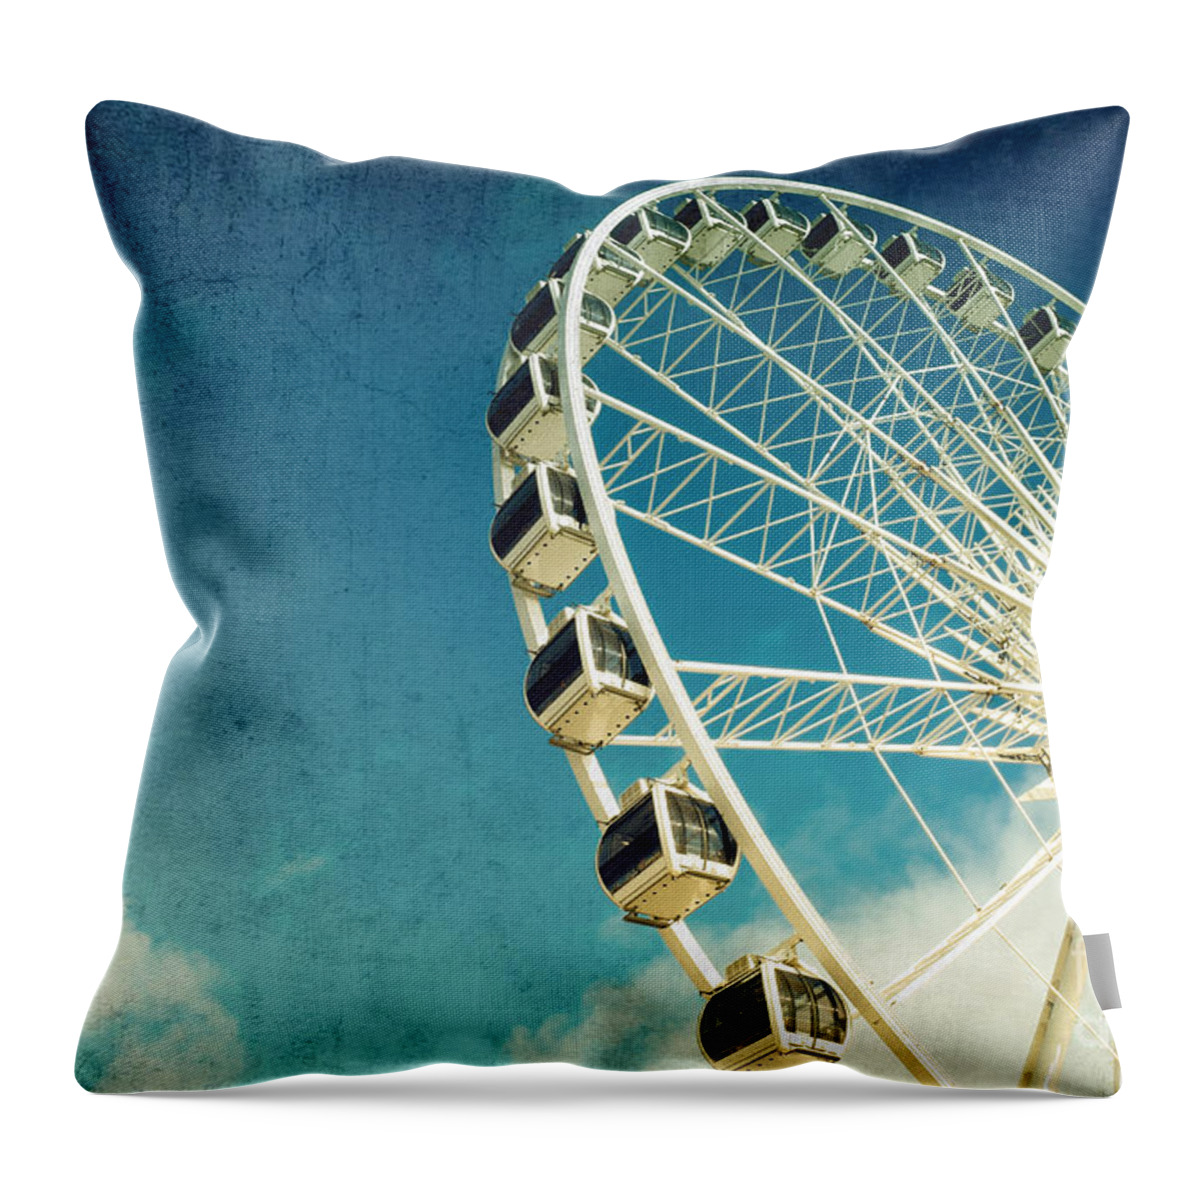 Wheel Throw Pillow featuring the photograph Ferris wheel retro by Jane Rix